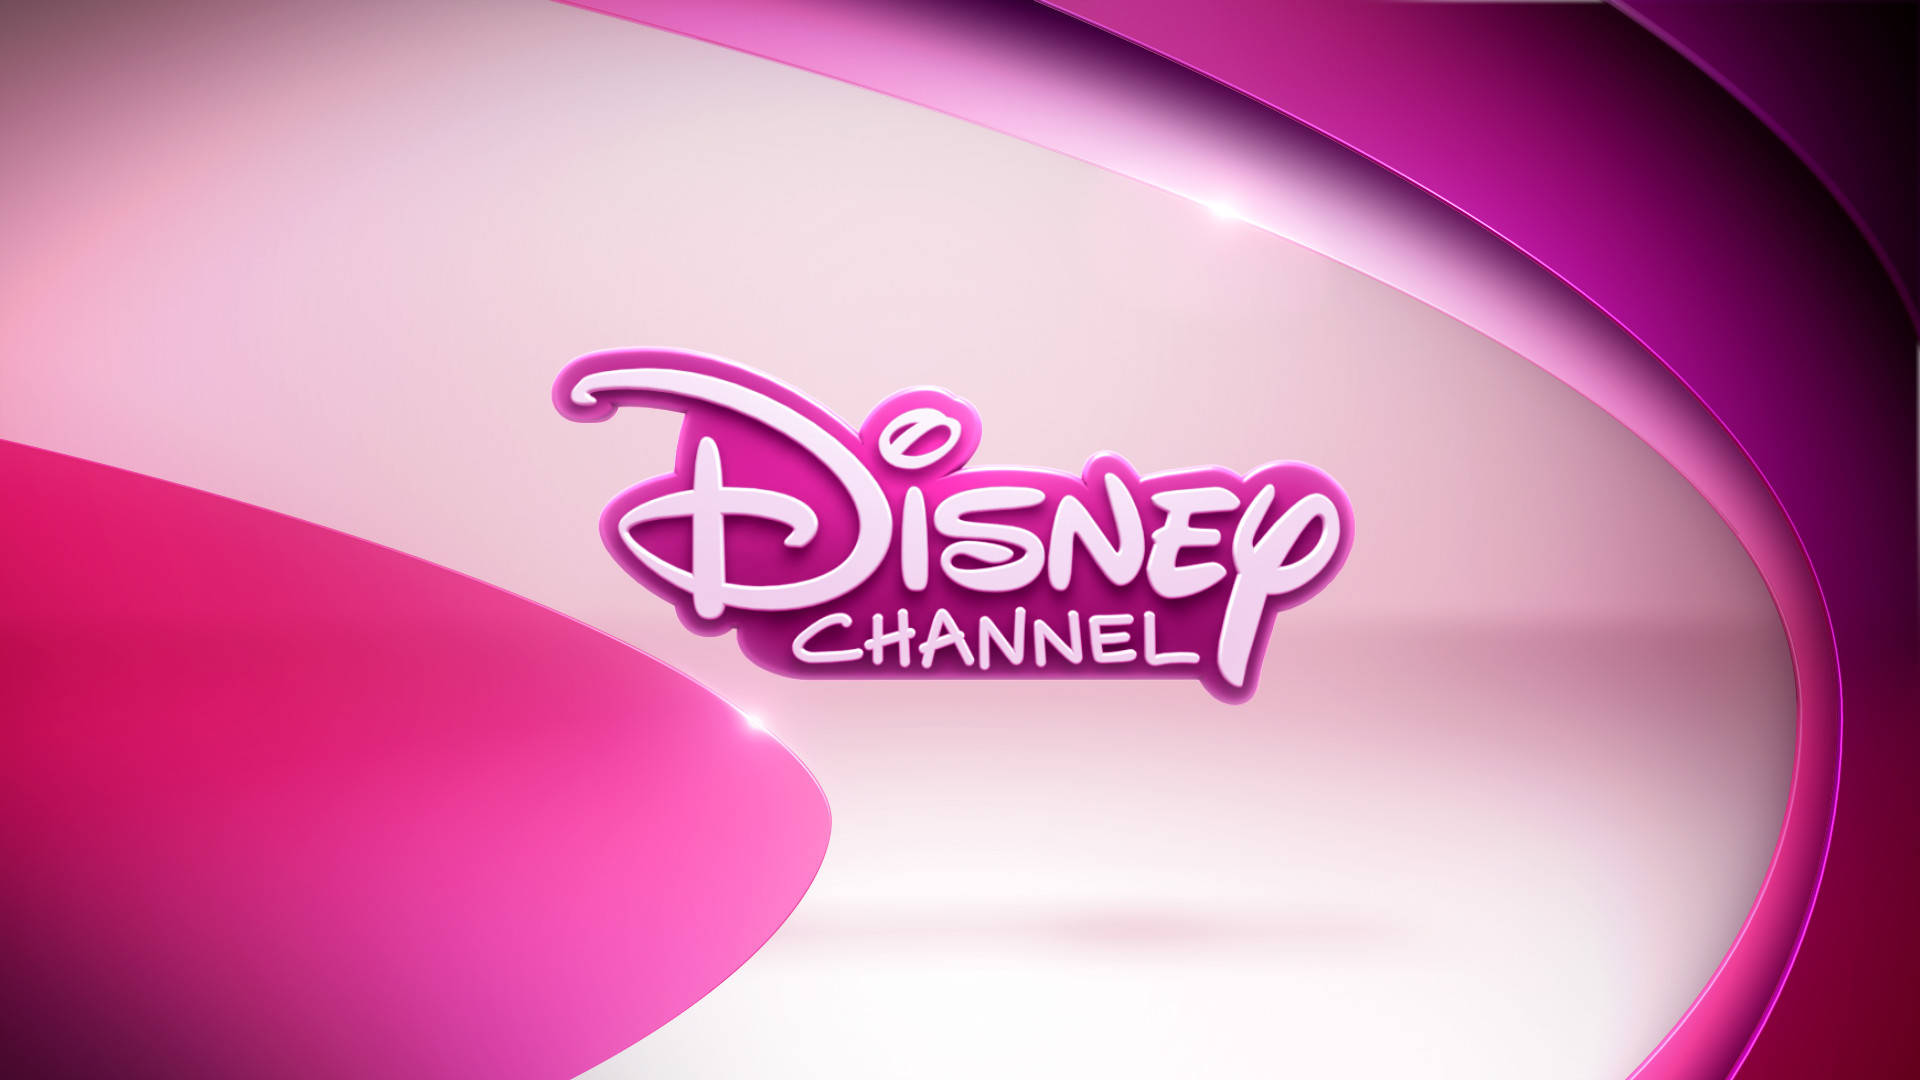 Disney Xd Pink Image Background